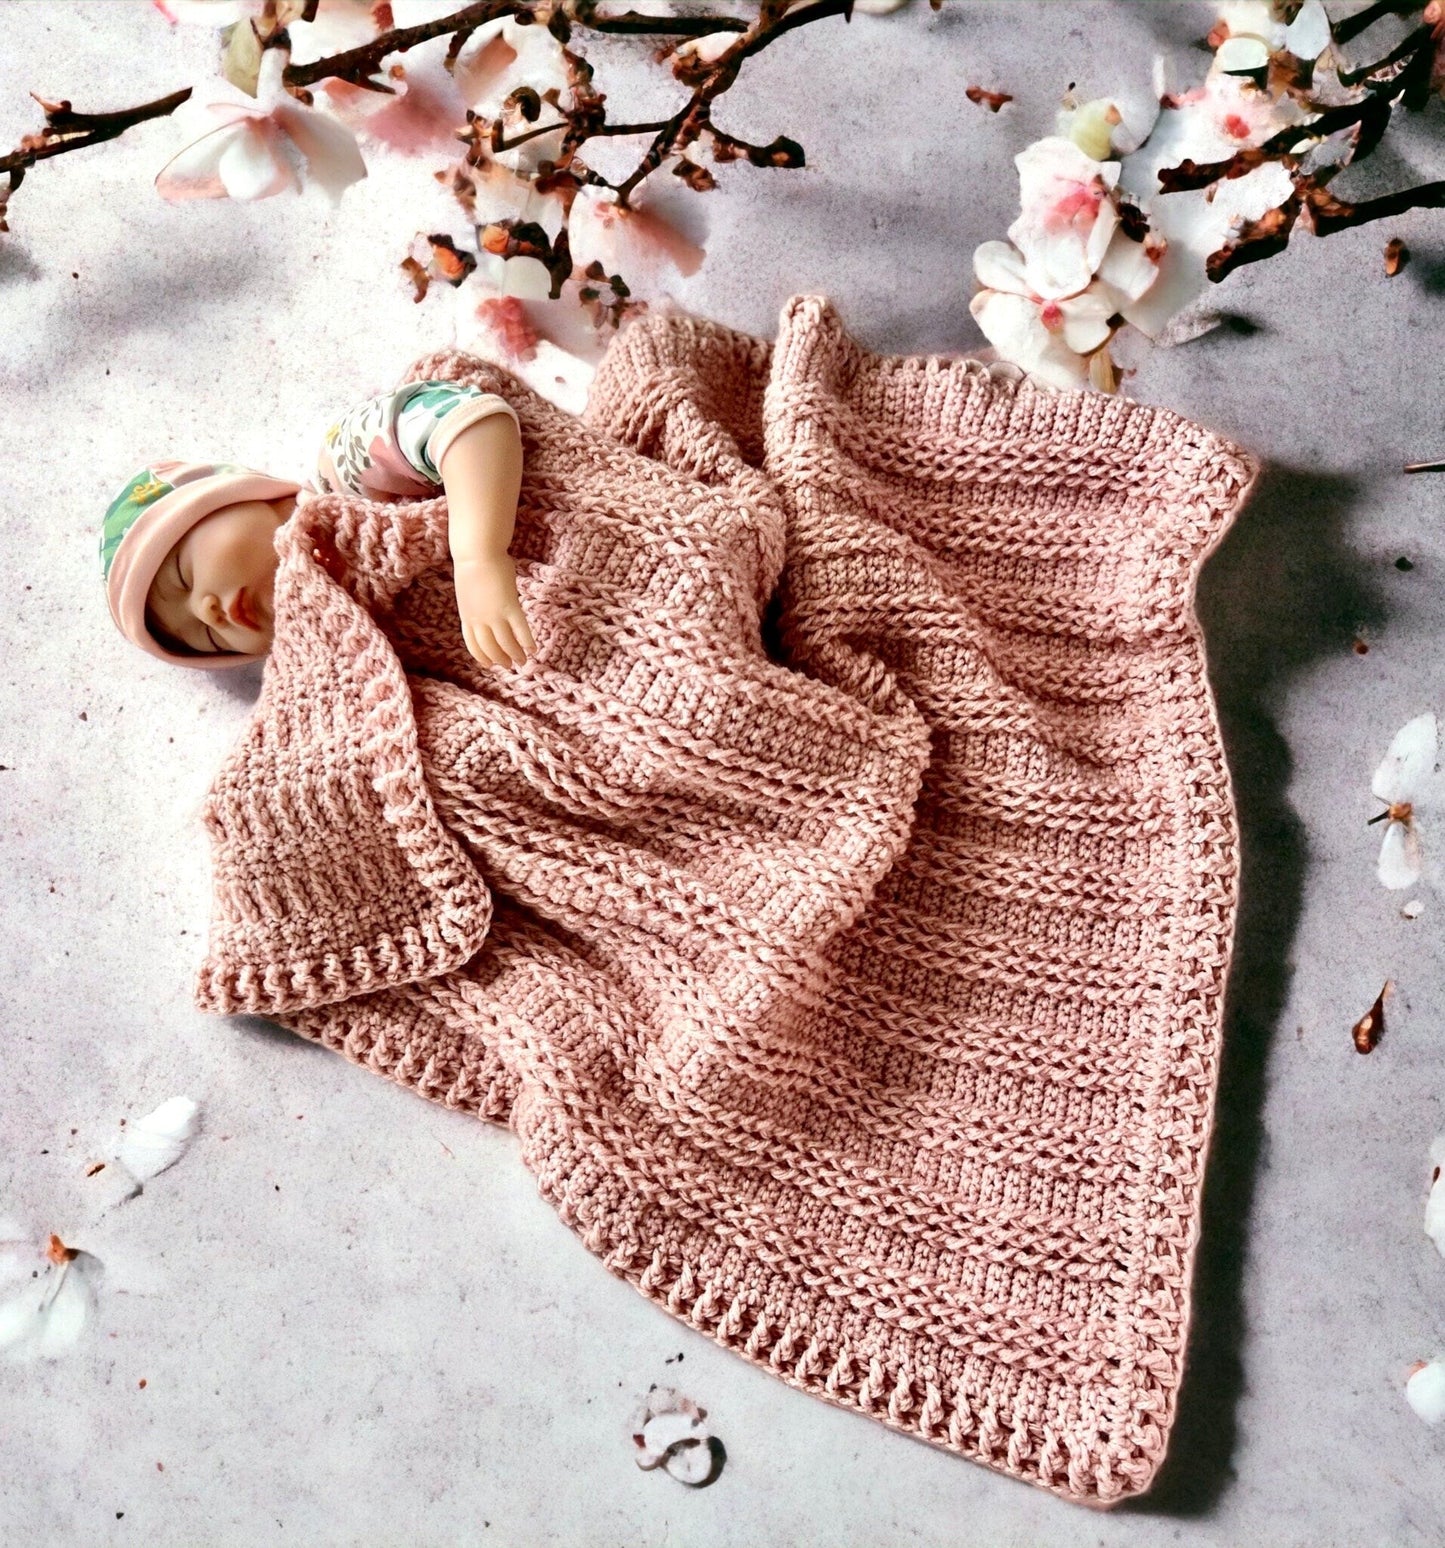 Victorian rose pink blanket for baby girl handmade, baby shower gift for baby girl, modern heirloom baby blanket 31”x26” cradle blanket - Lilly Grace Sparkle Boutique